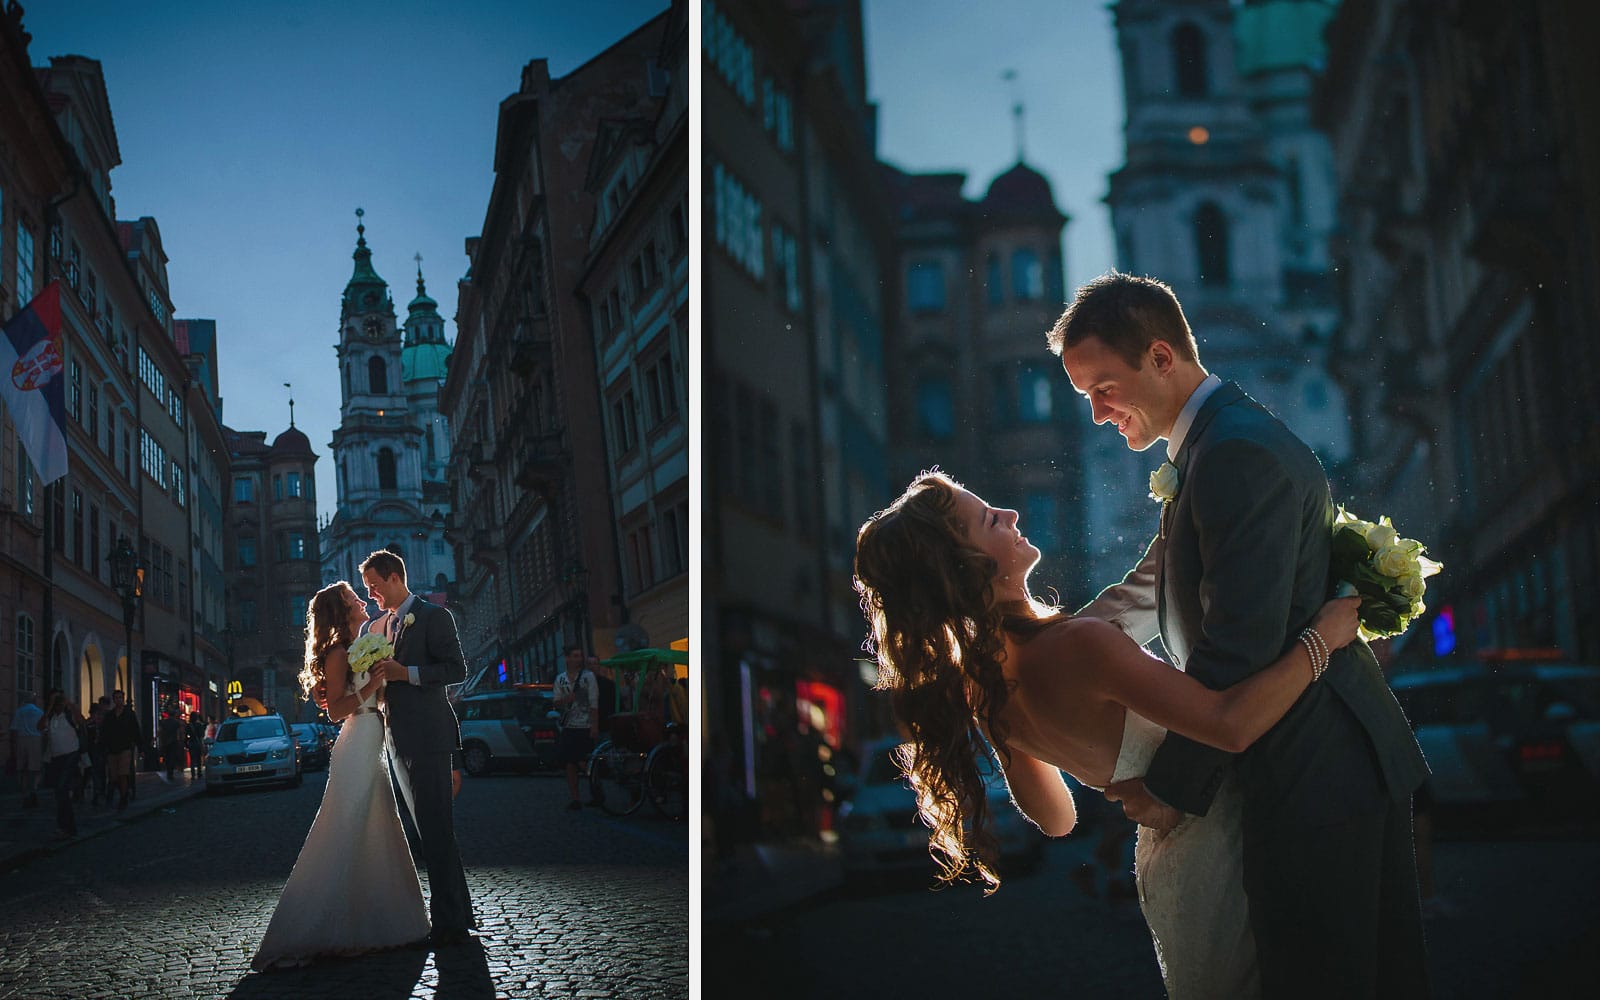 Prague wedding photographers / R&B wedding photographs in Mala Strana